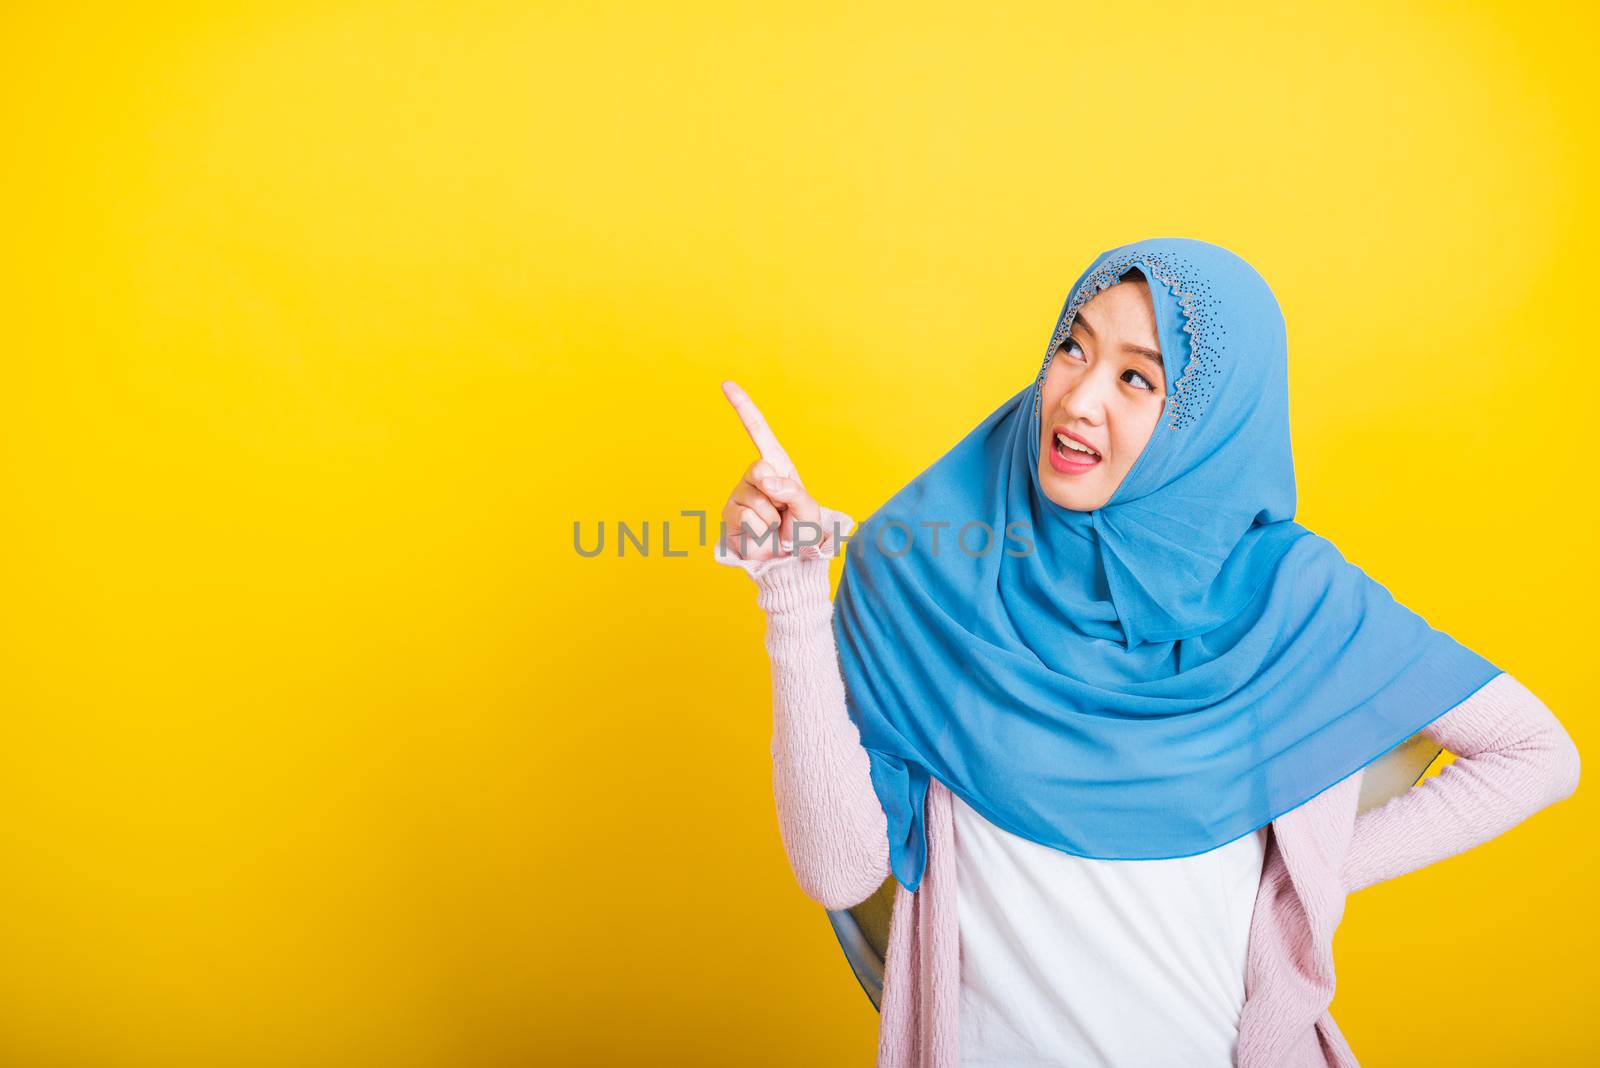 Asian Muslim Arab woman Islam wear hijab smile she positive expr by Sorapop